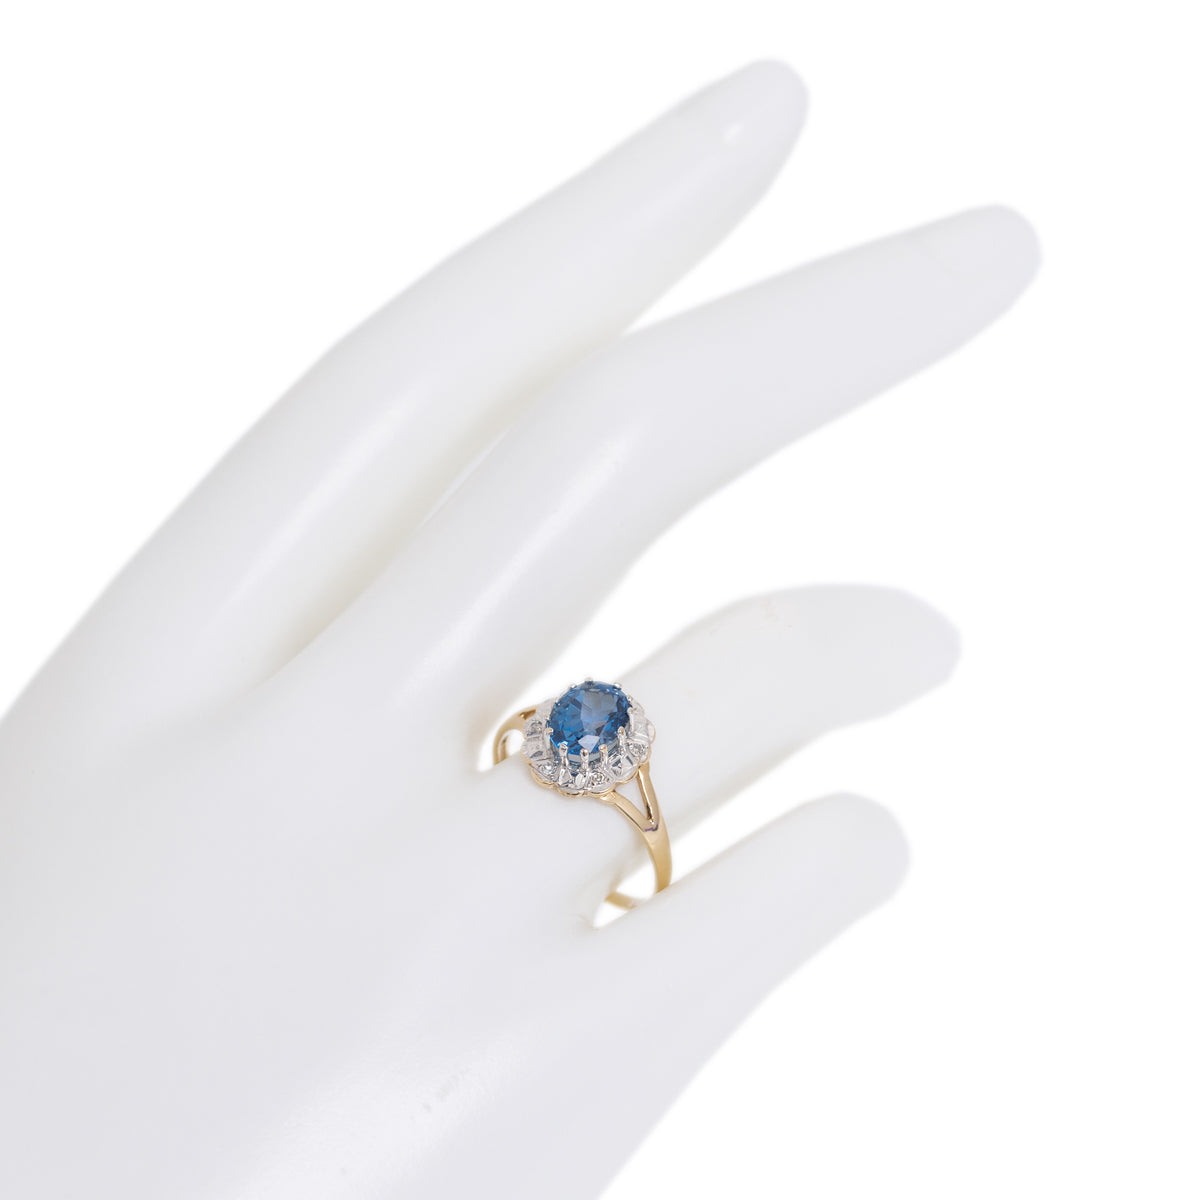 Vintage 9ct Gold Blue Topaz & Diamond Ladies Ring UK Size Q (Code A1025)